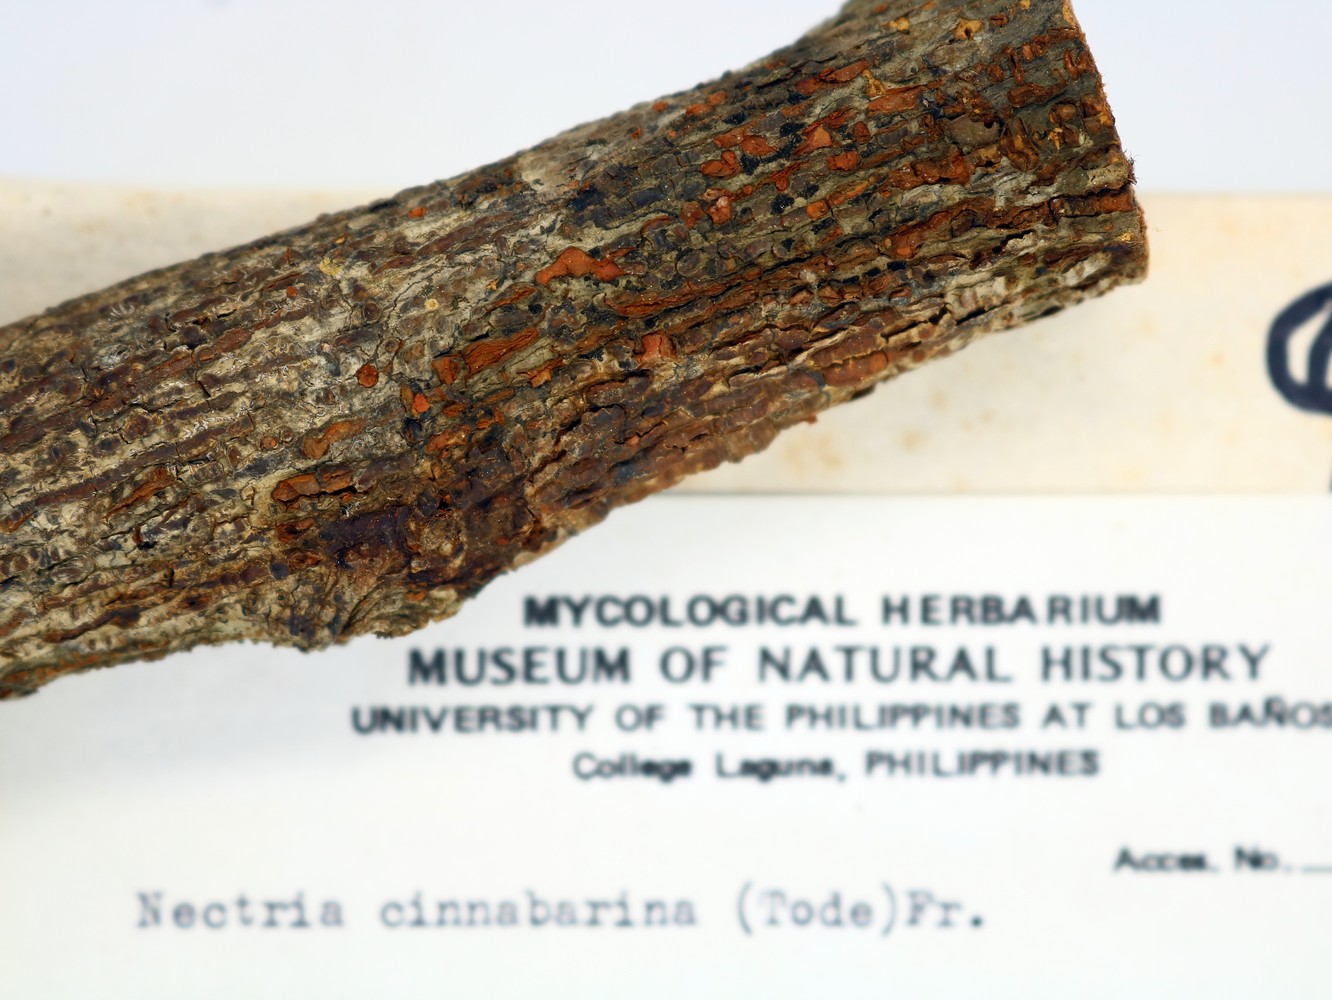 MNH-mycological-herbarium-02